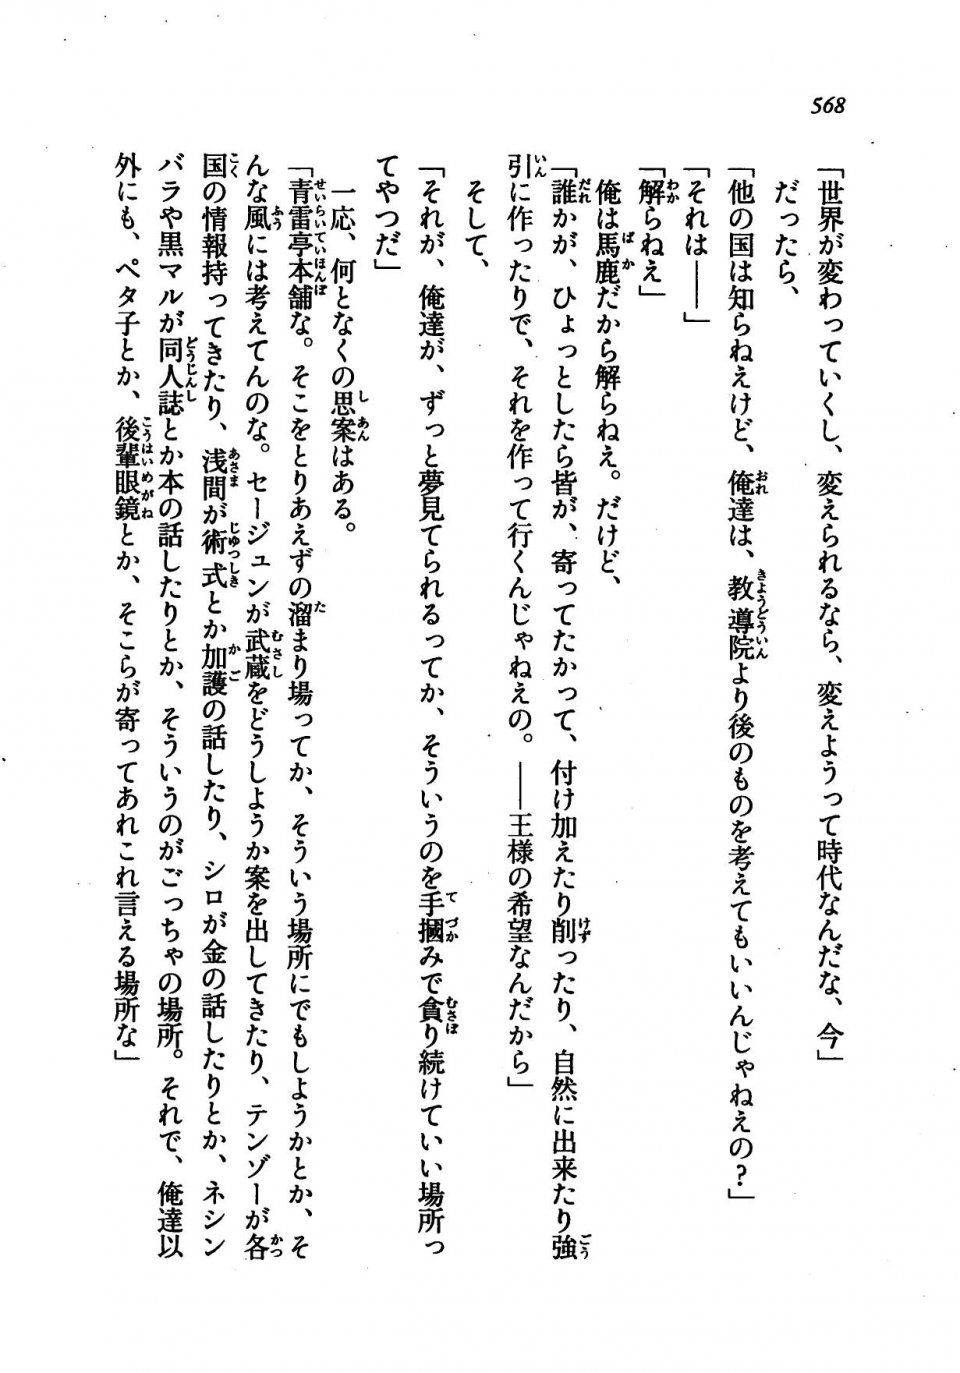 Kyoukai Senjou no Horizon LN Vol 21(8C) Part 2 - Photo #52